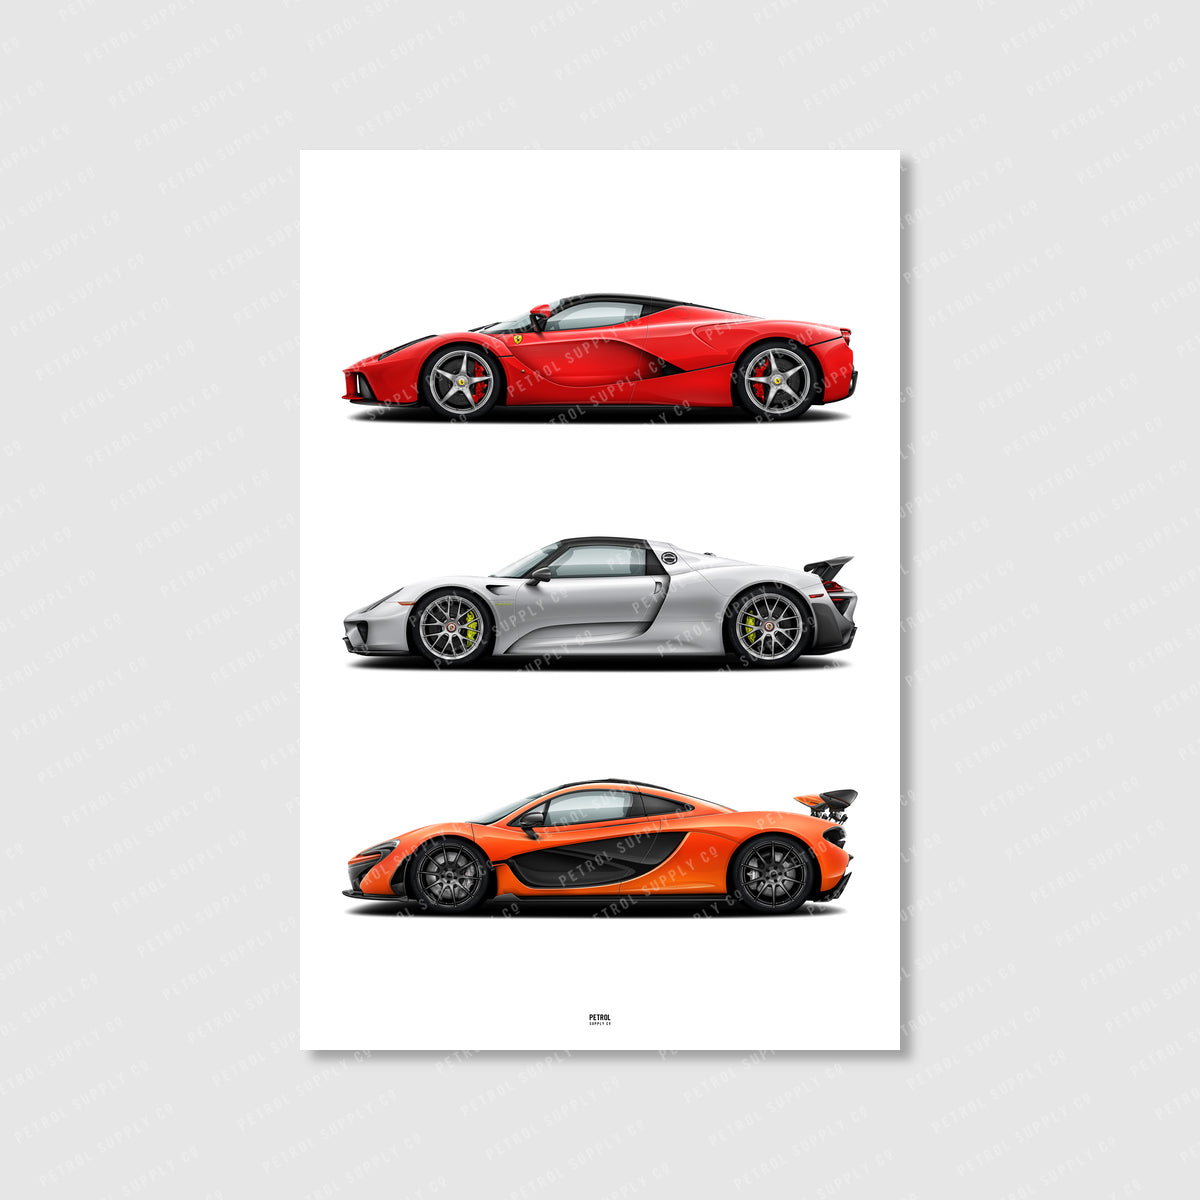 Hypercar Holy Trinity Poster - Ferrari LaFerrari, Porsche 918 Spyder, McLaren P1